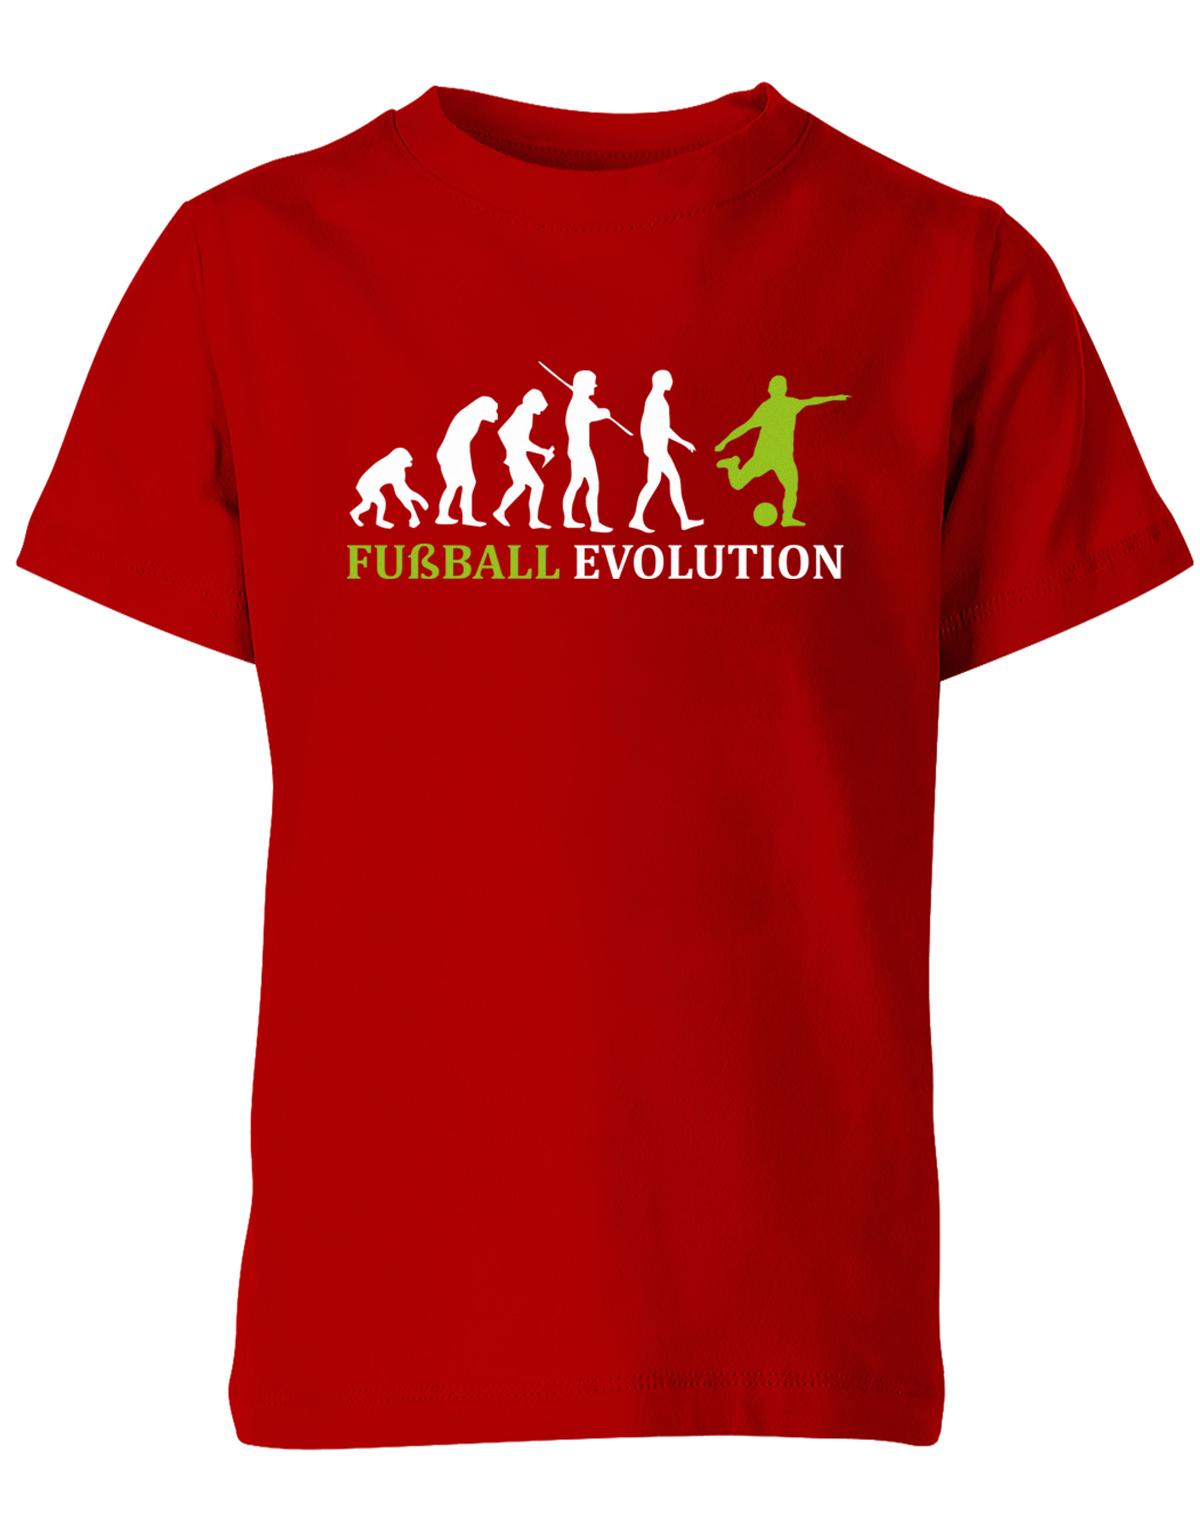 Fussball-Evolution-Kinder-Shirt-Rot-Gr-n